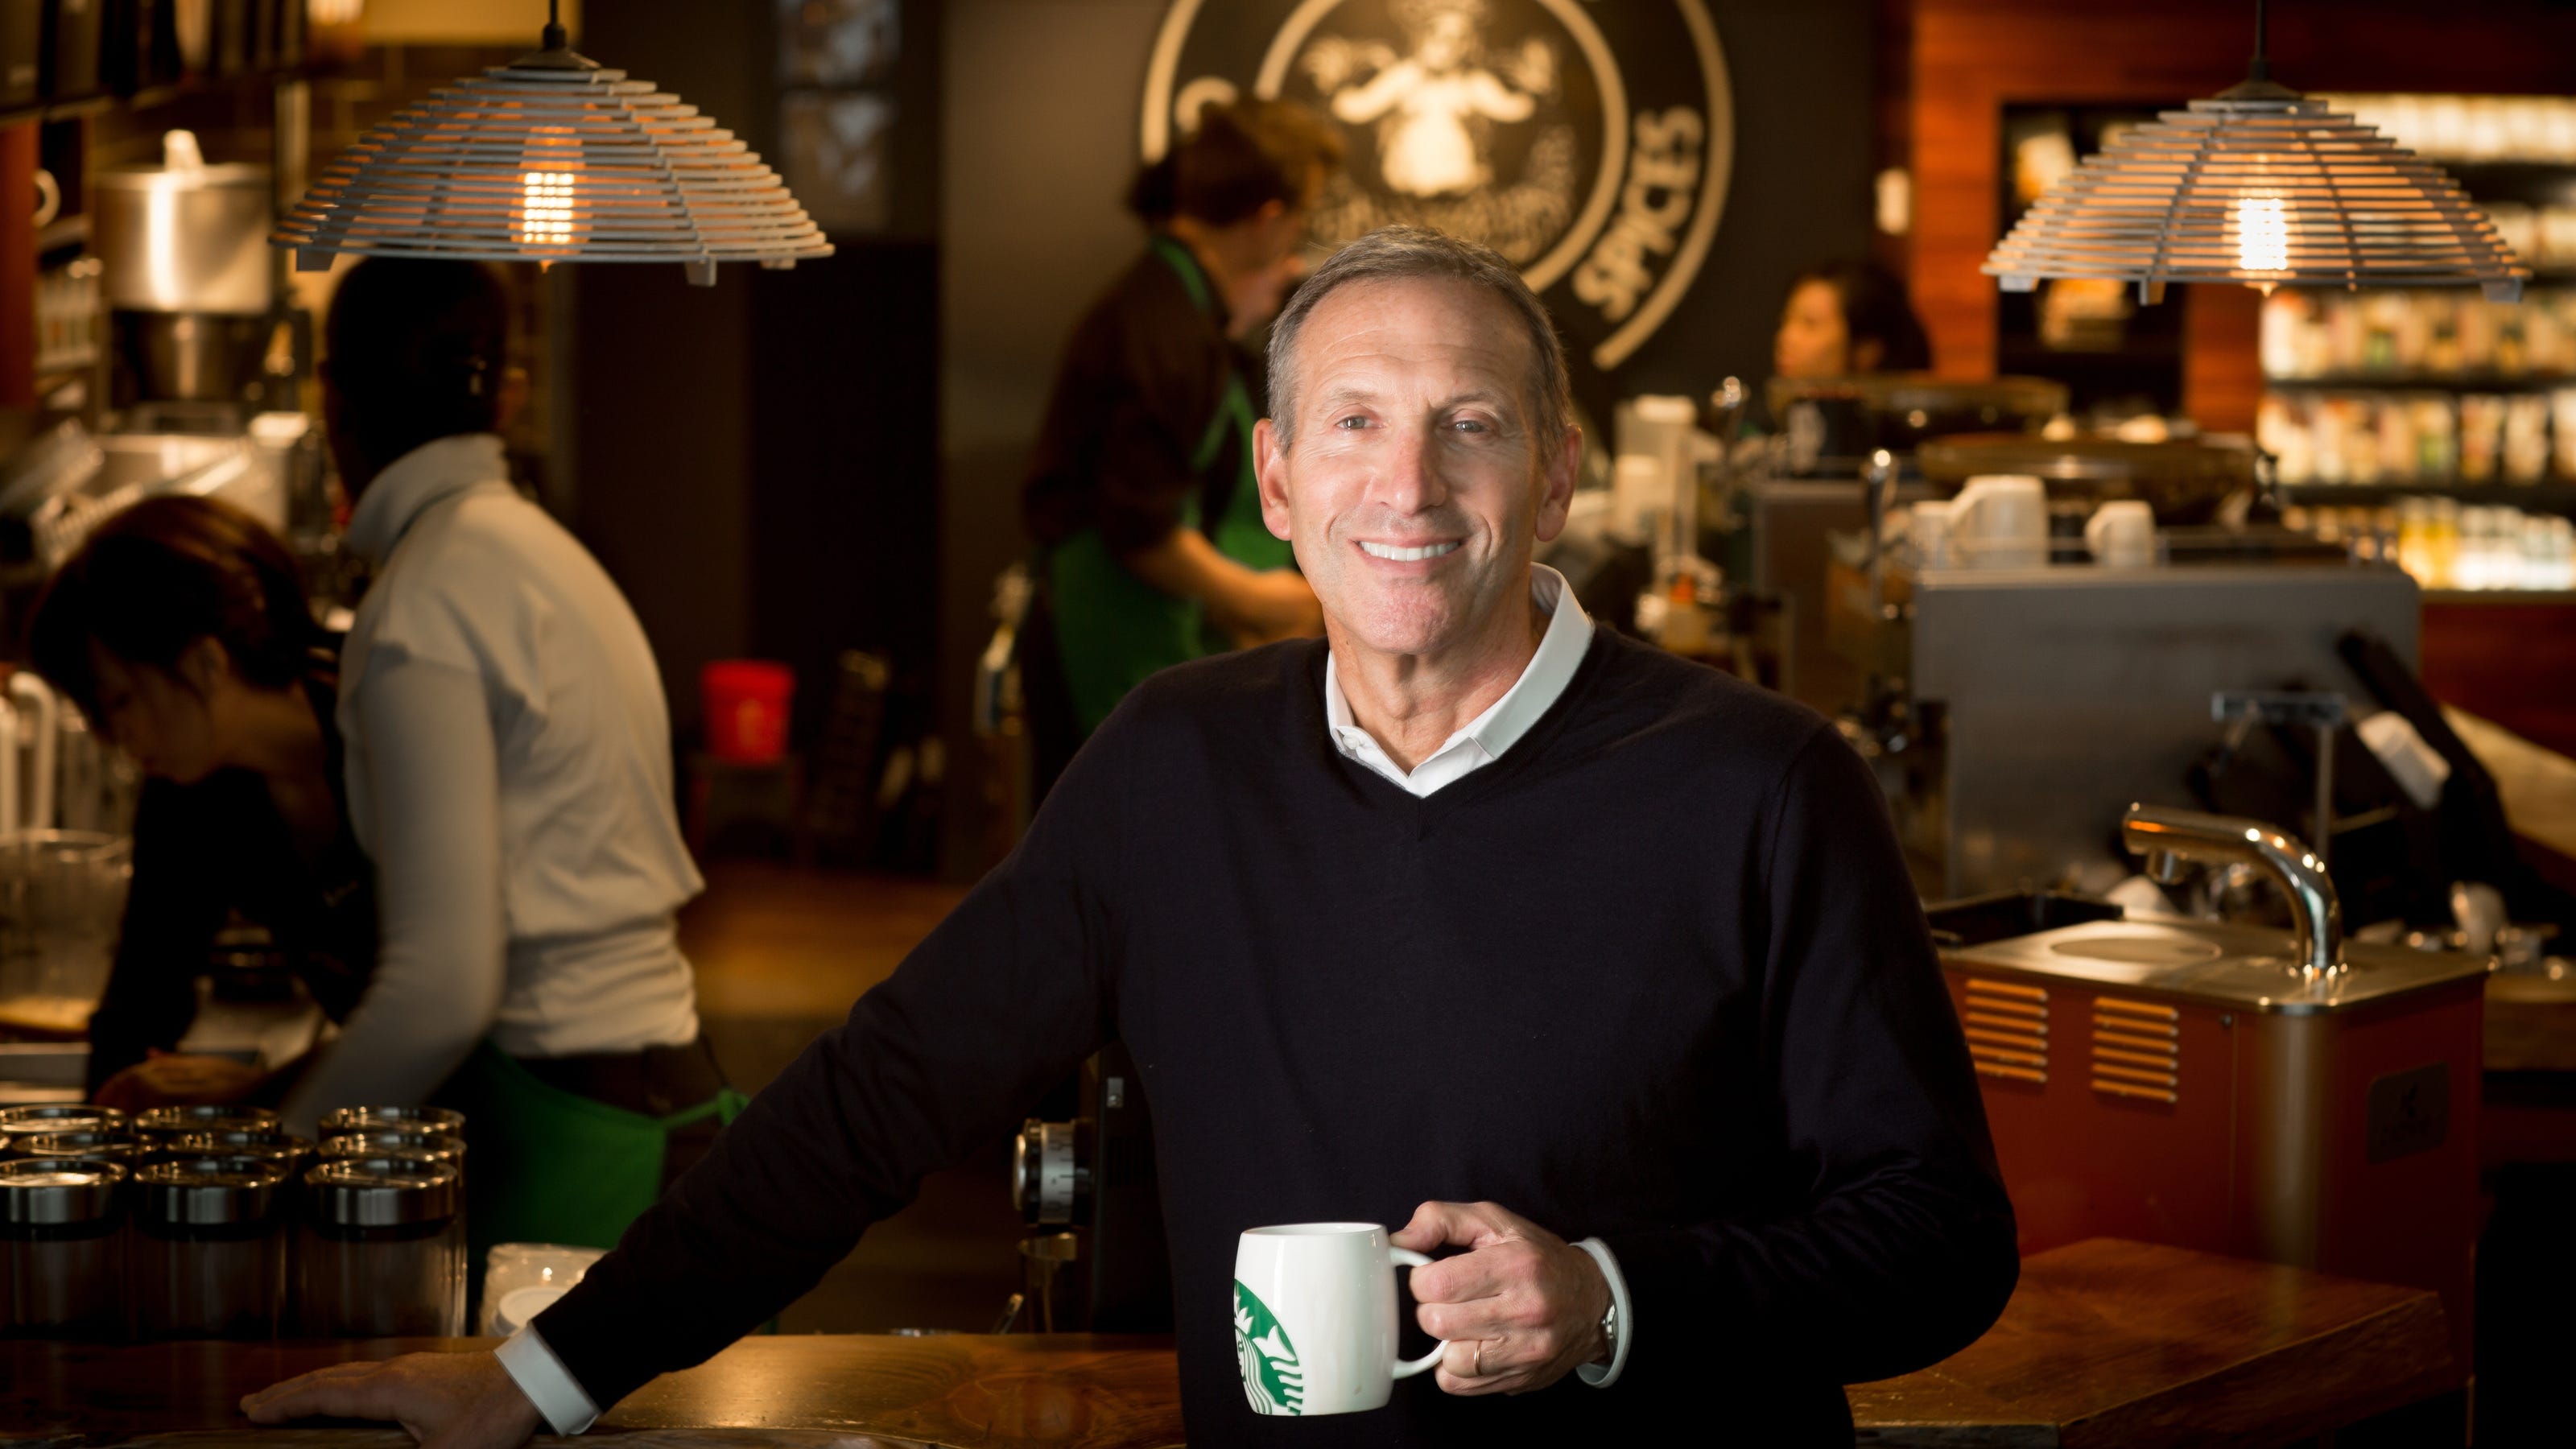 Howard Shultz on Starbucks Future Plans to